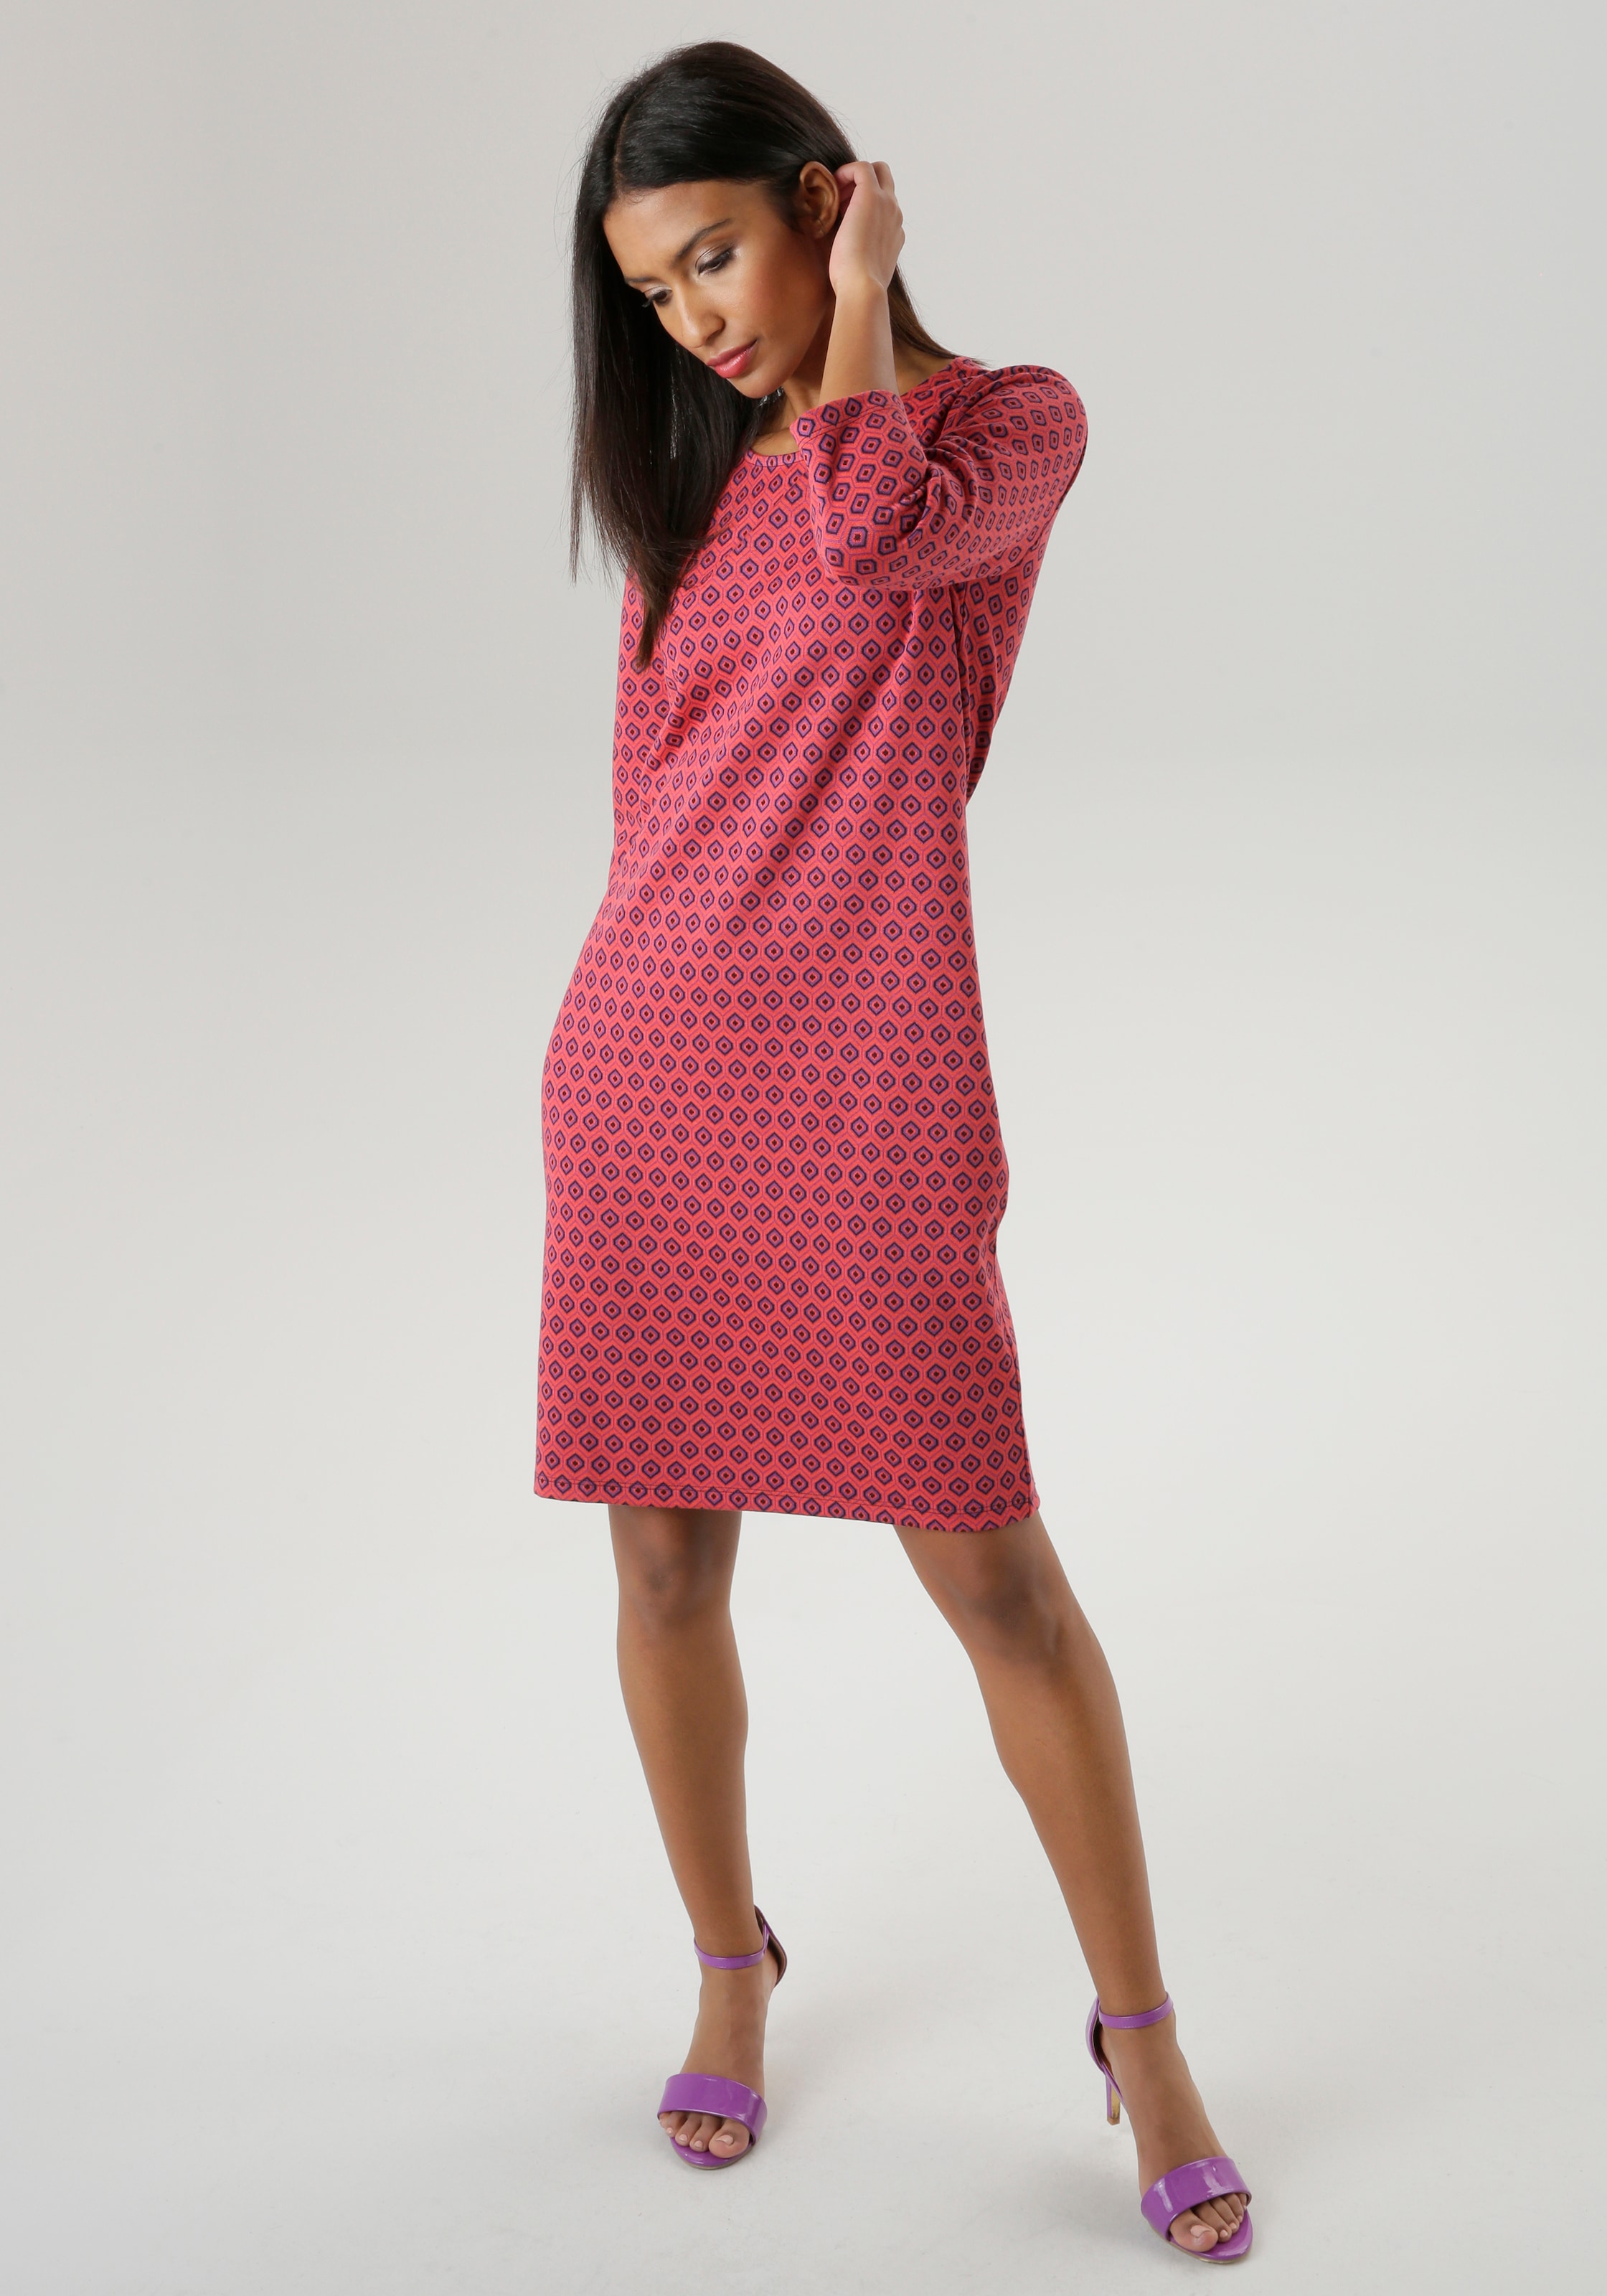 bestellen - Retromuster trendy NEUE Aniston mit SELECTED KOLLEKTION Jerseykleid,